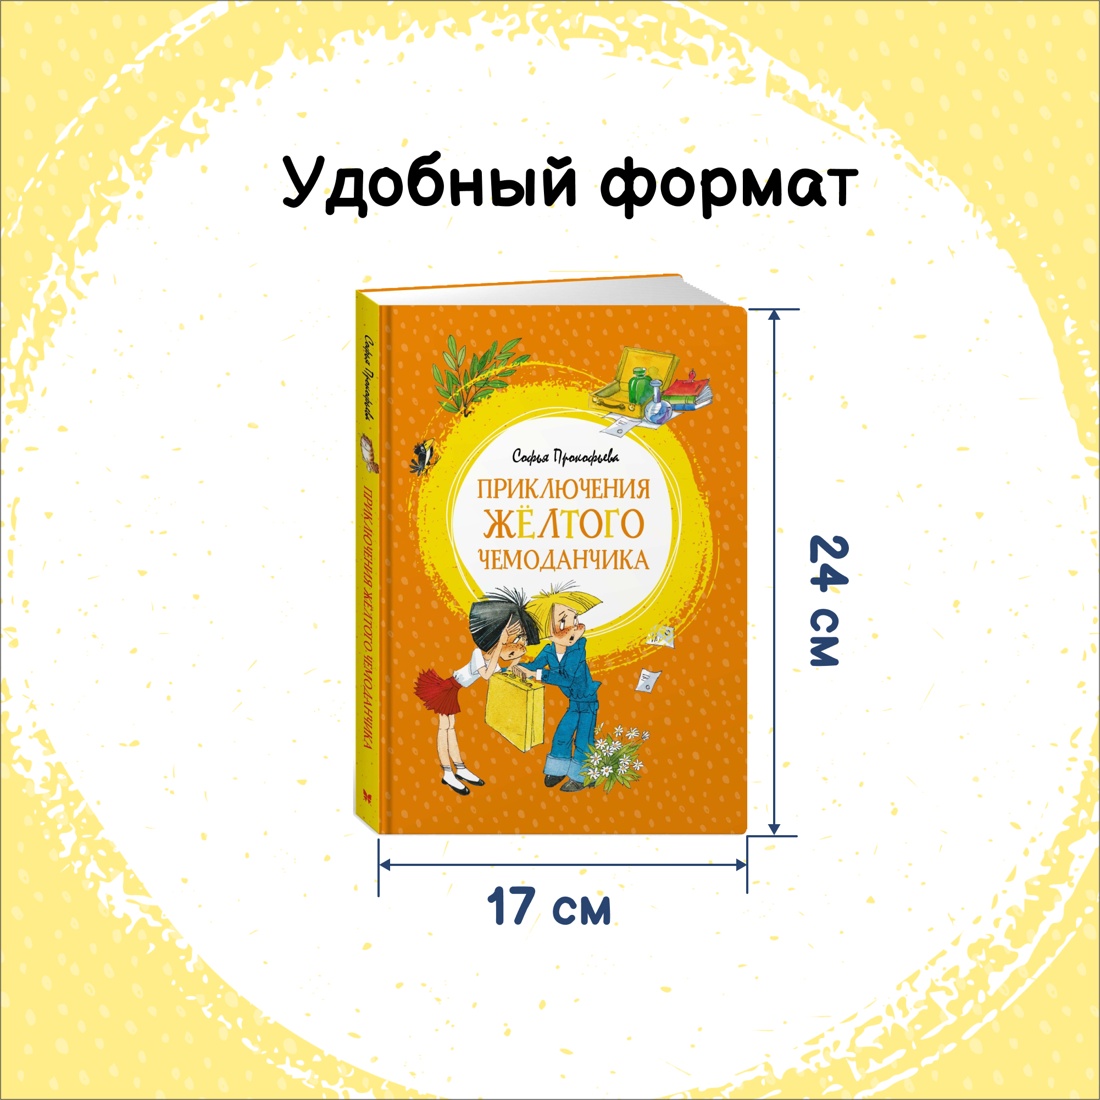 Промо материал к книге "Приключения жёлтого чемоданчика" №1